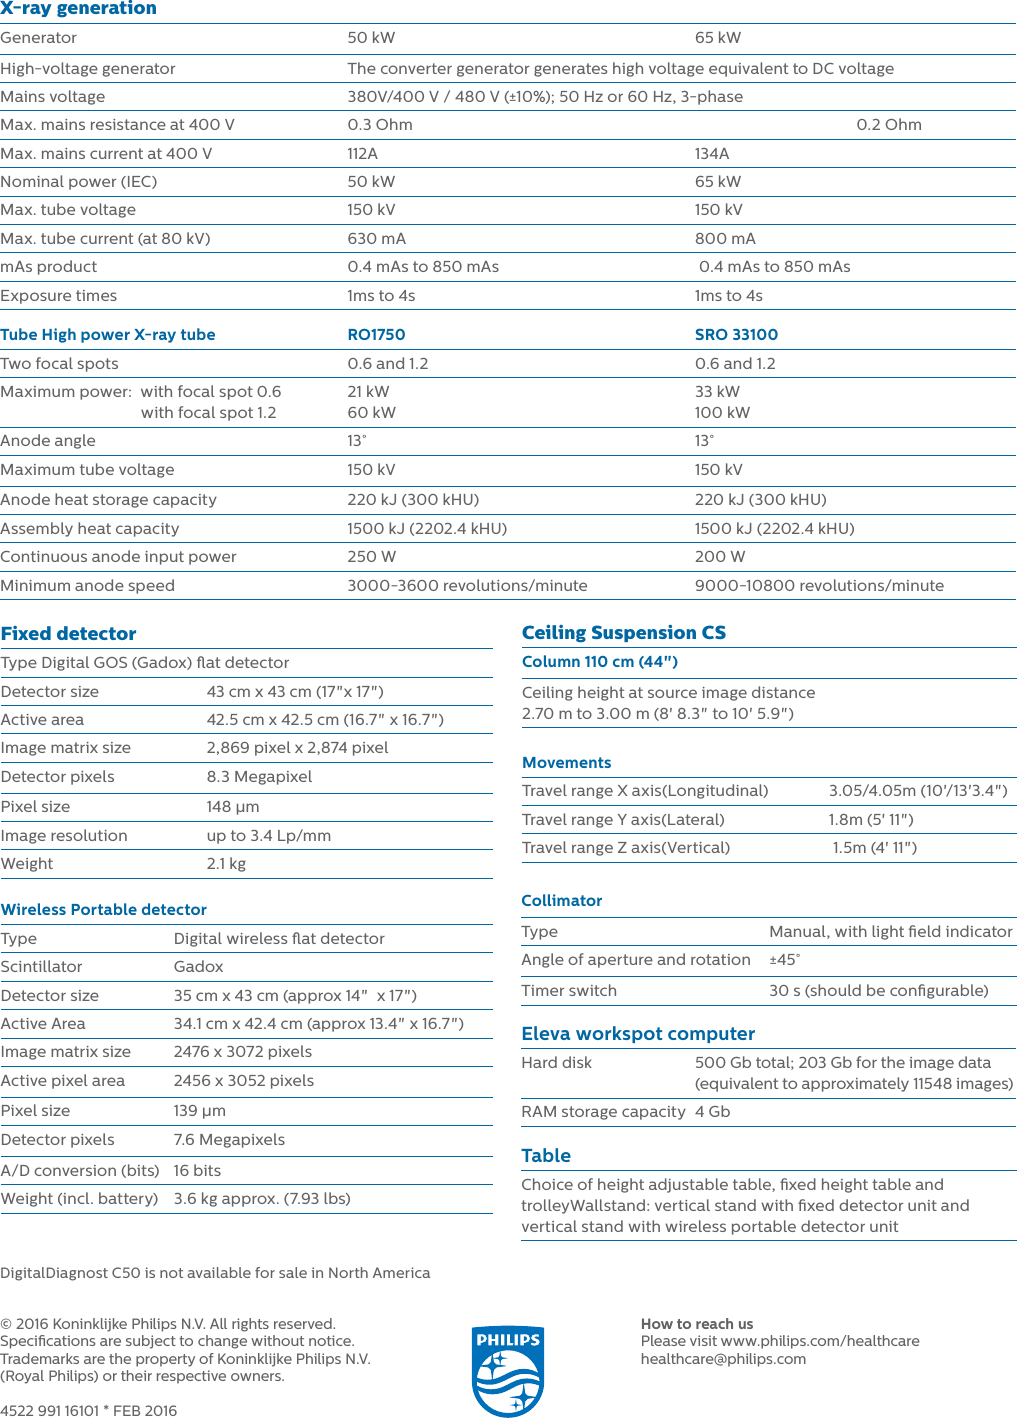 Philips NOCTN502 User Manual Digital Diagnost C50 Product Overview